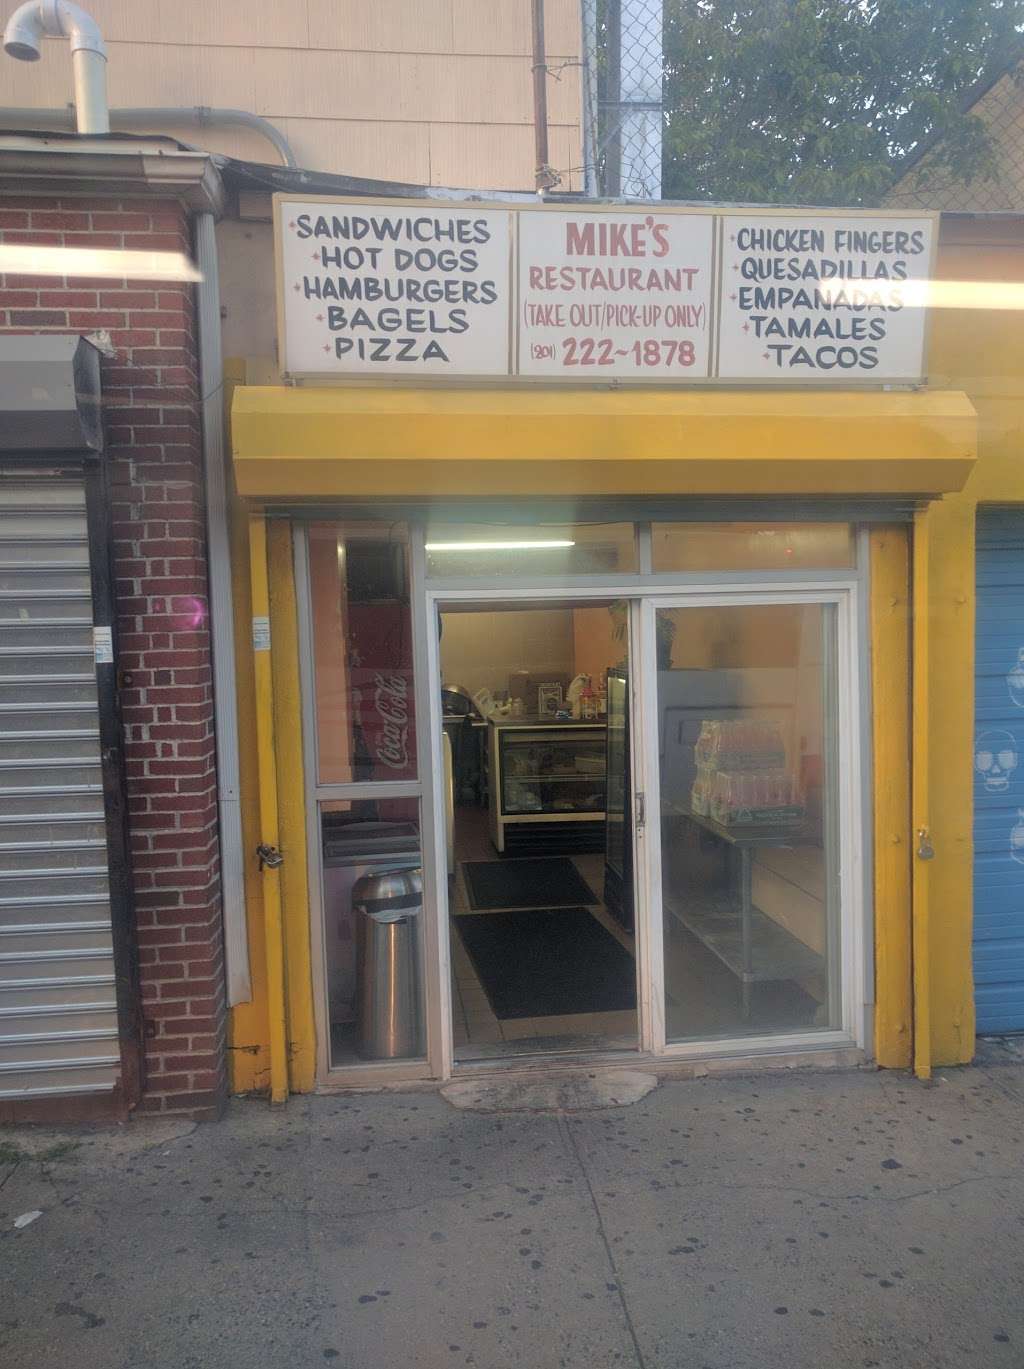 Mikes Restaurant - restaurant  | Photo 10 of 10 | Address: 602 Palisade Ave, Jersey City, NJ 07307, USA | Phone: (201) 222-1878